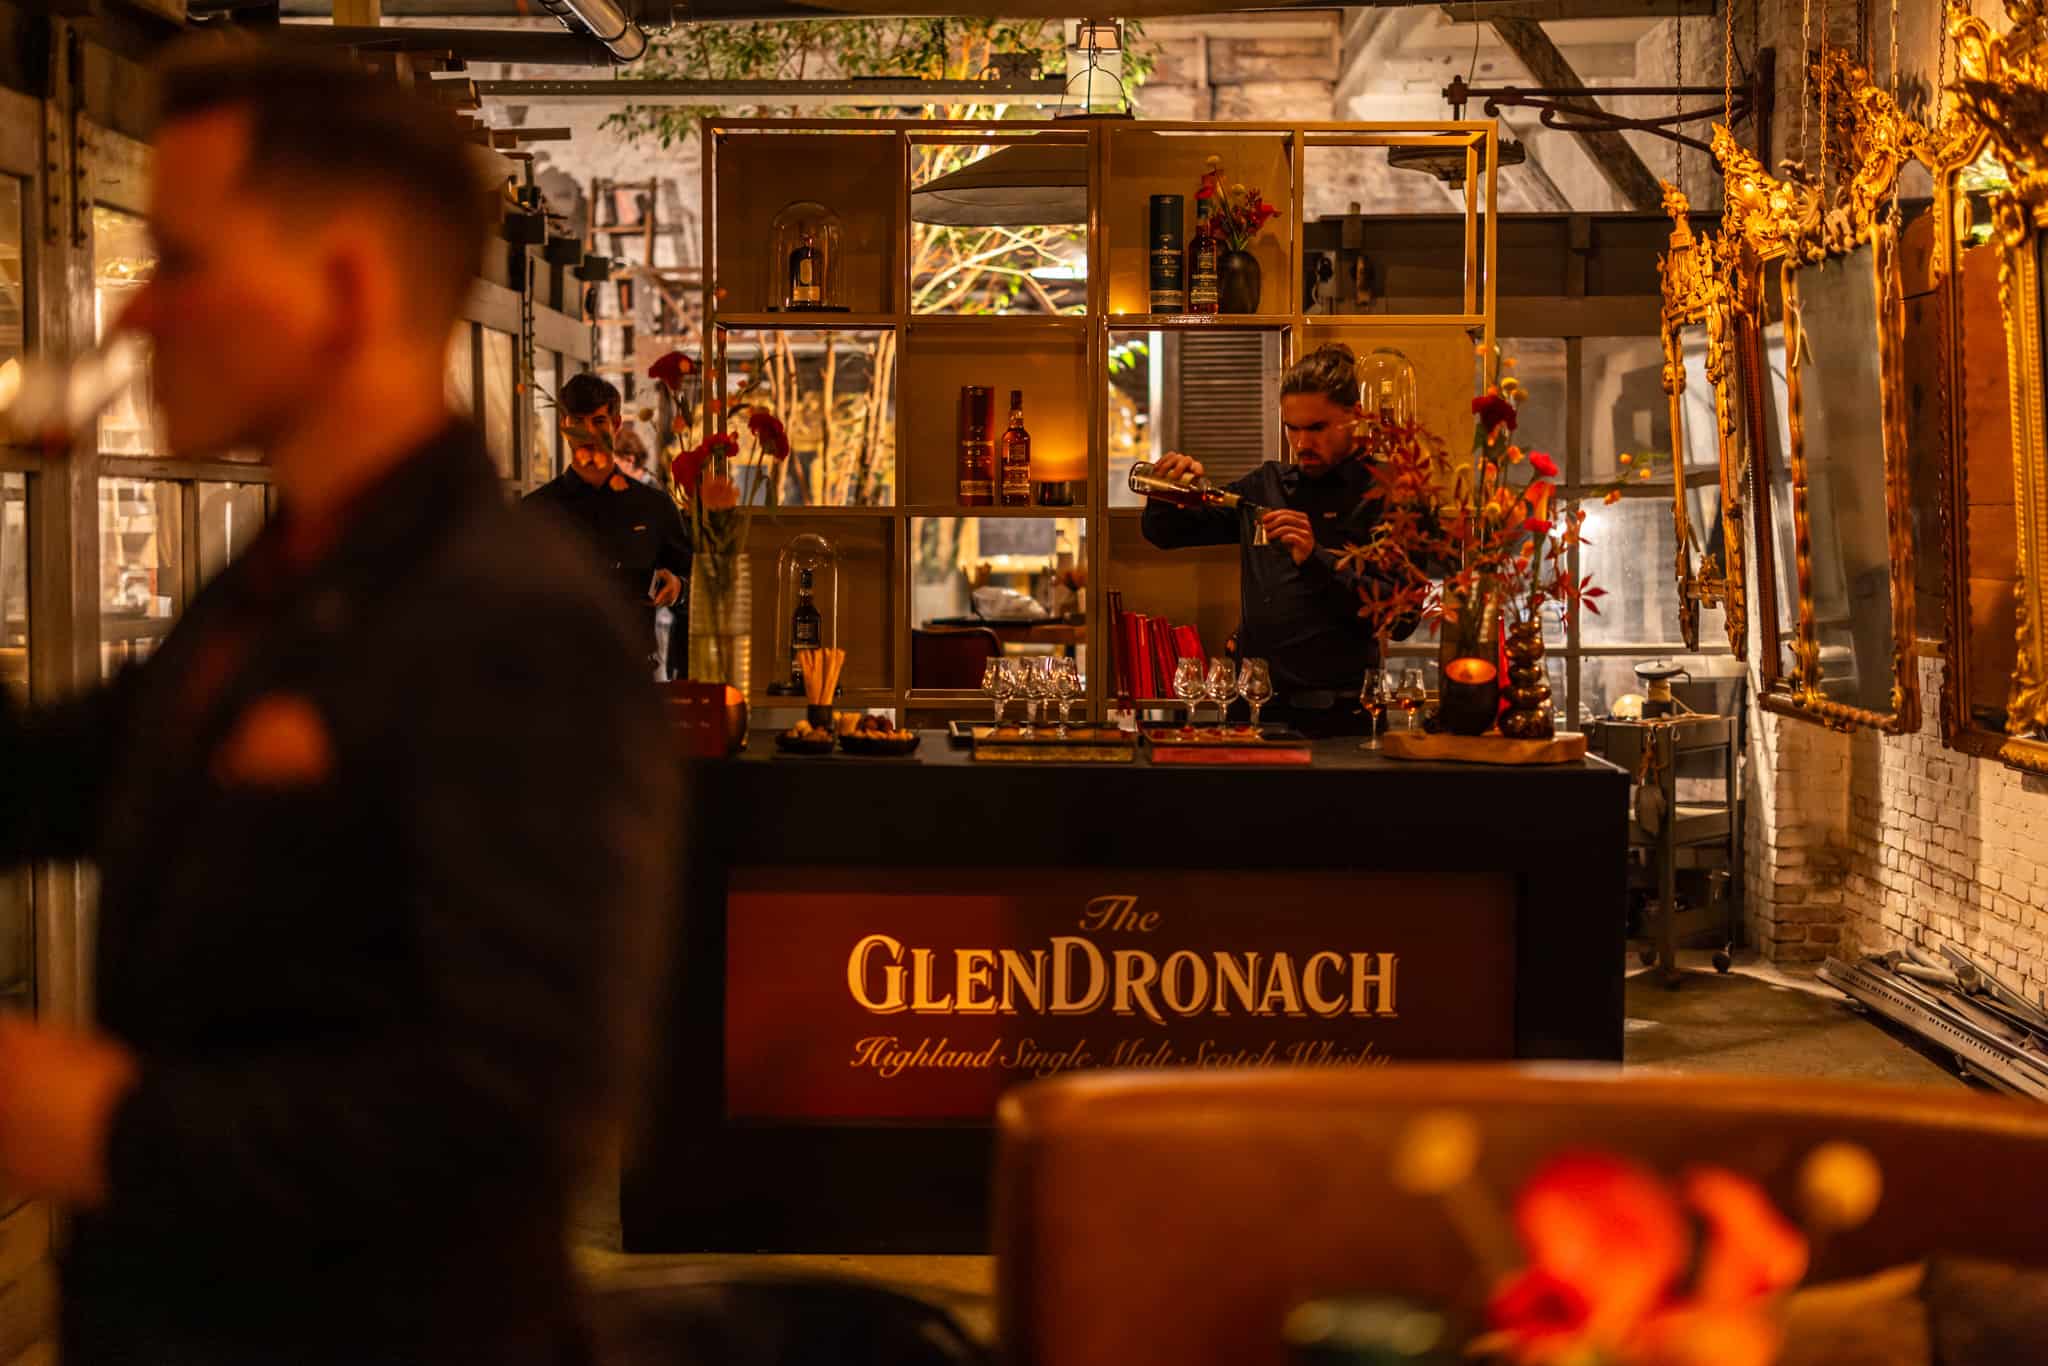 The GlenDronach